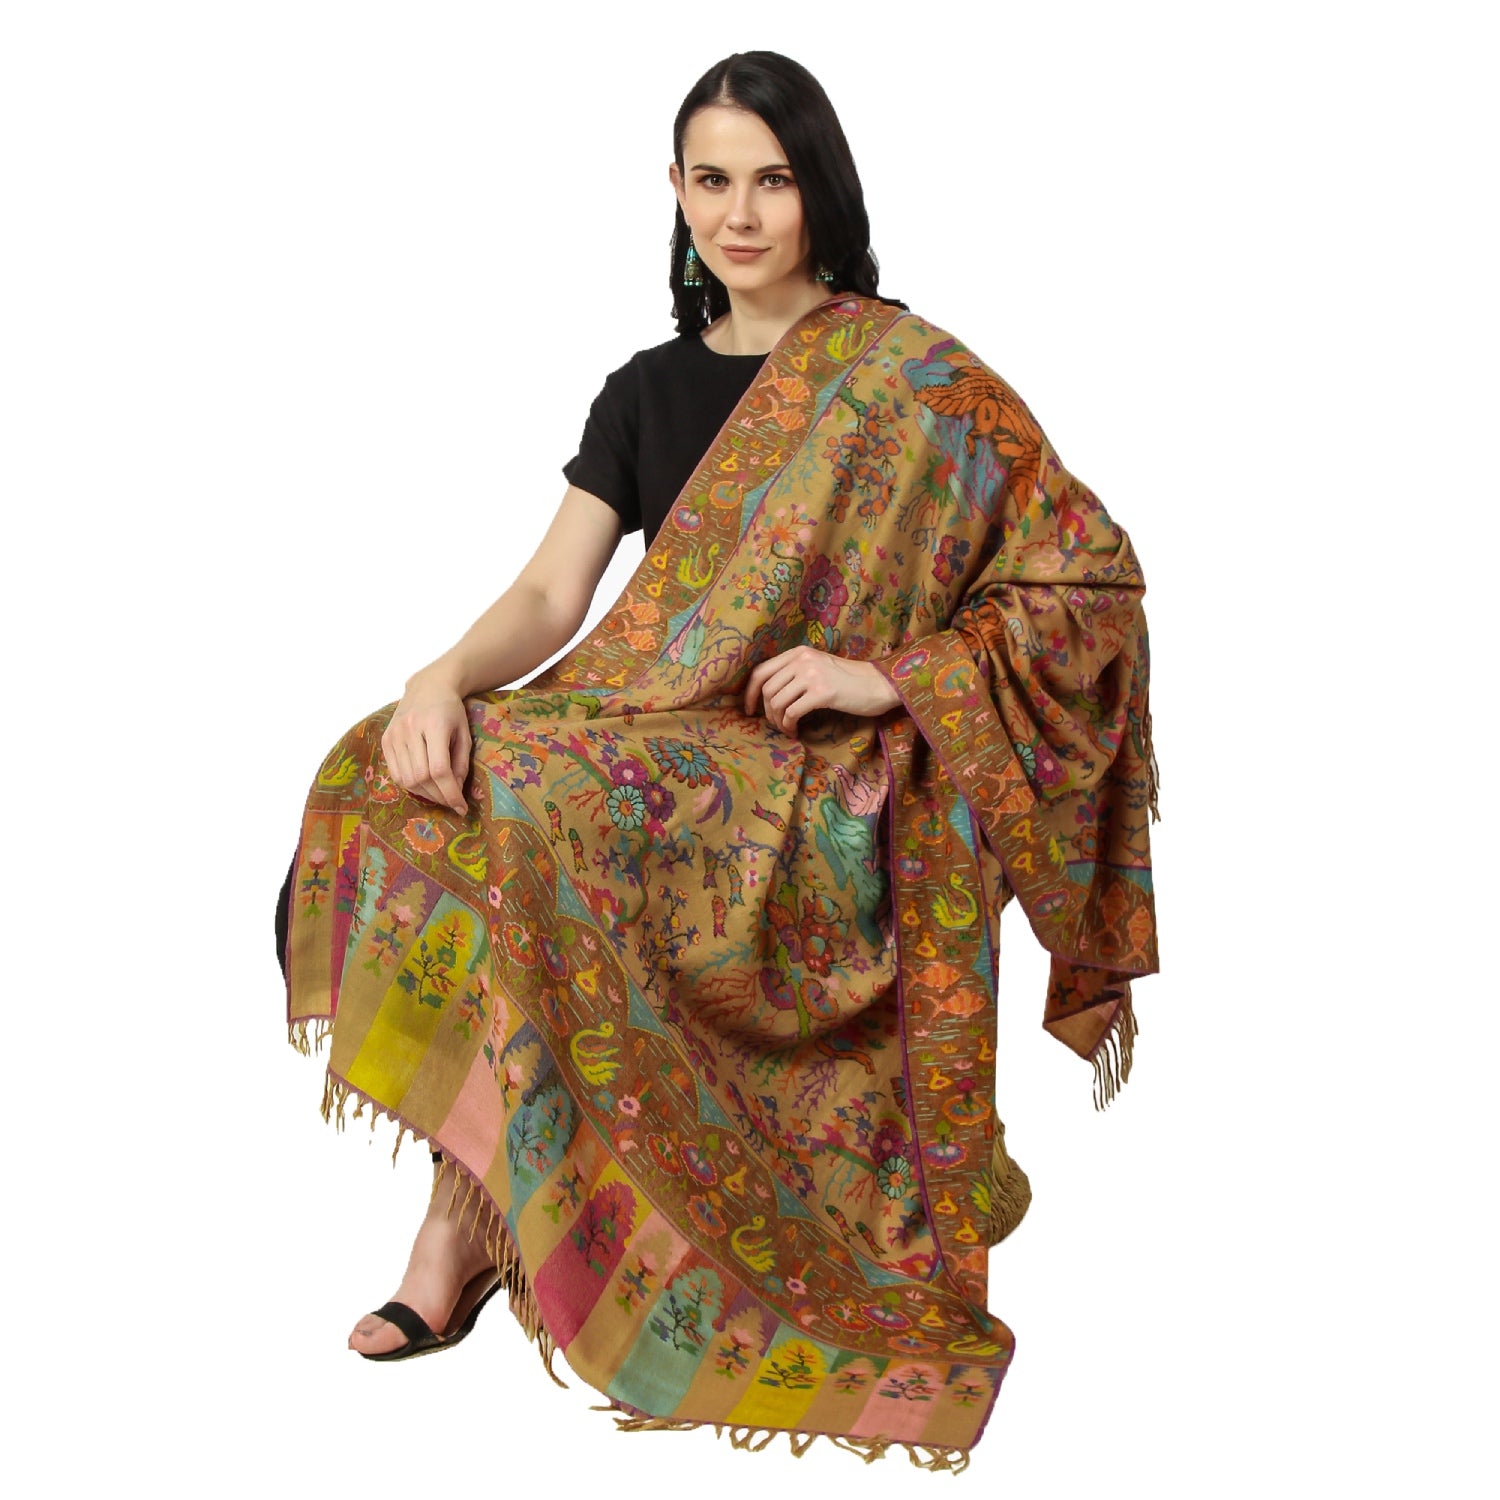 A woman wearing Kani Pashmina shawl while sitting on a chair wearing black dress.